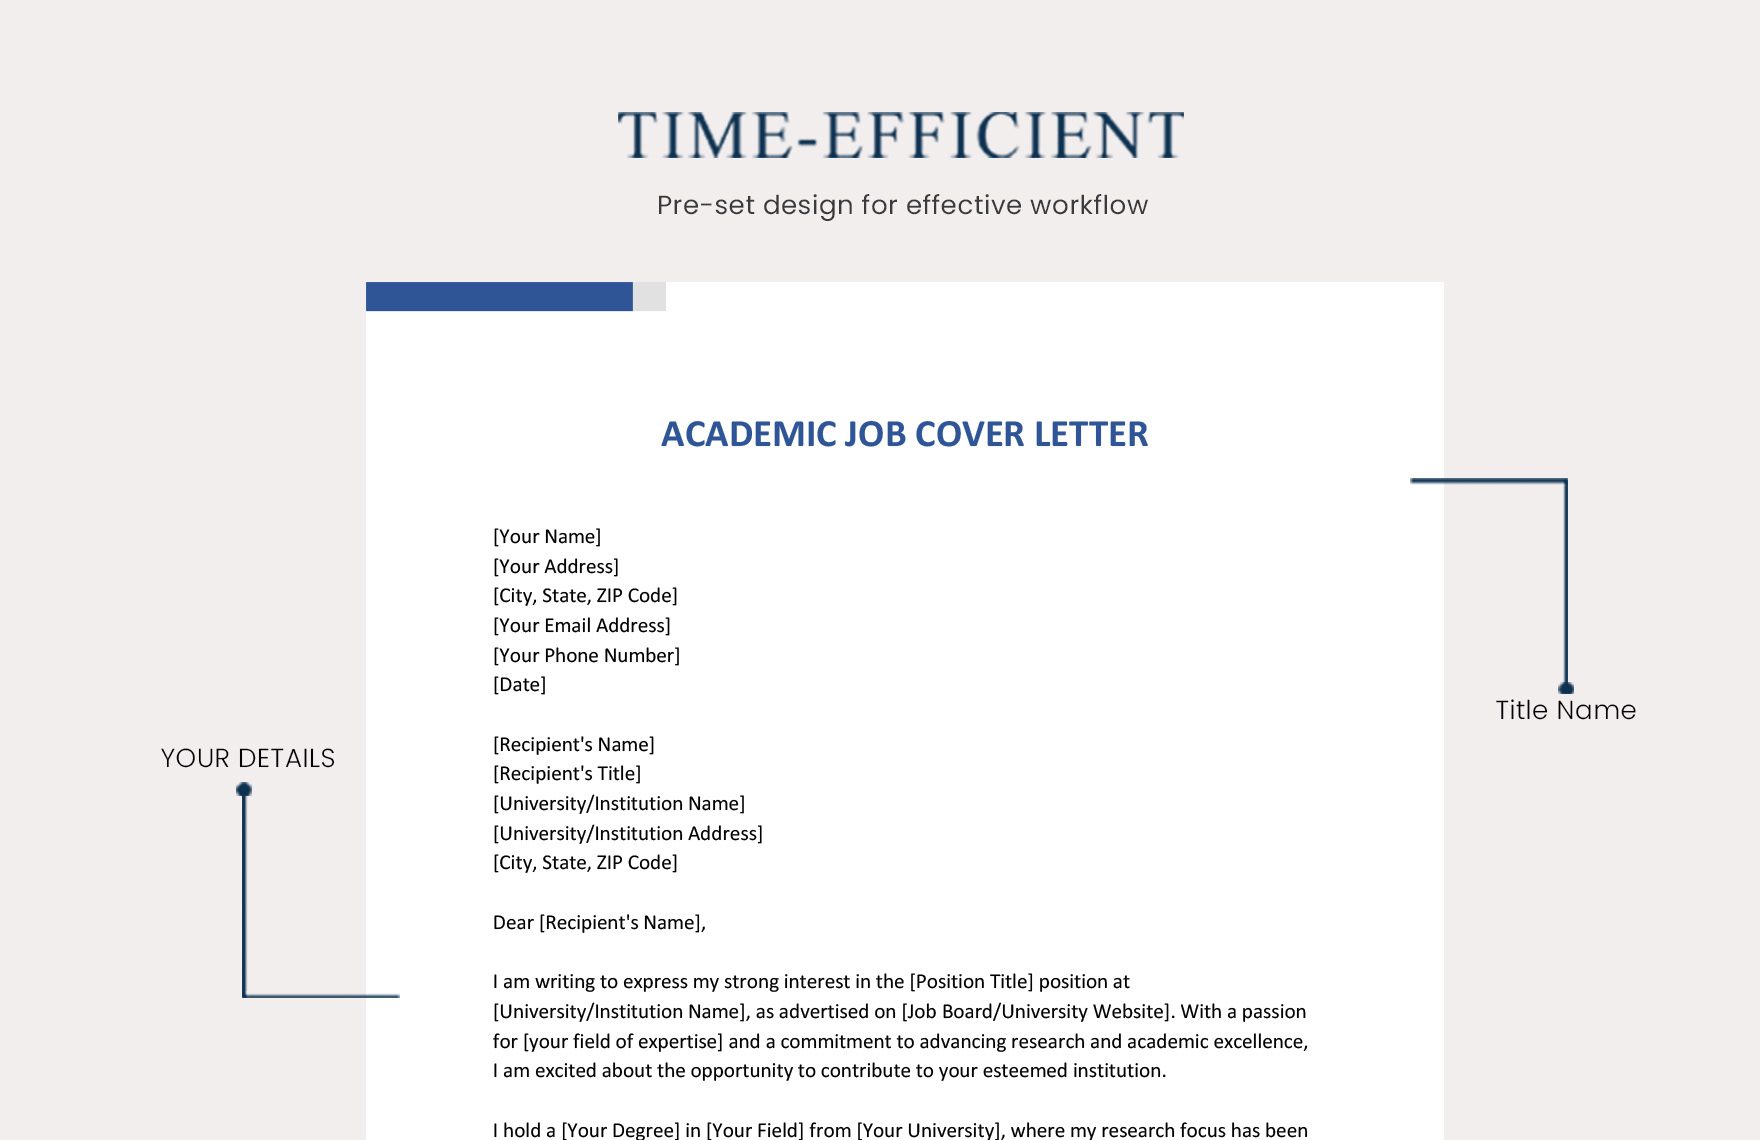 Academic Job Cover Letter